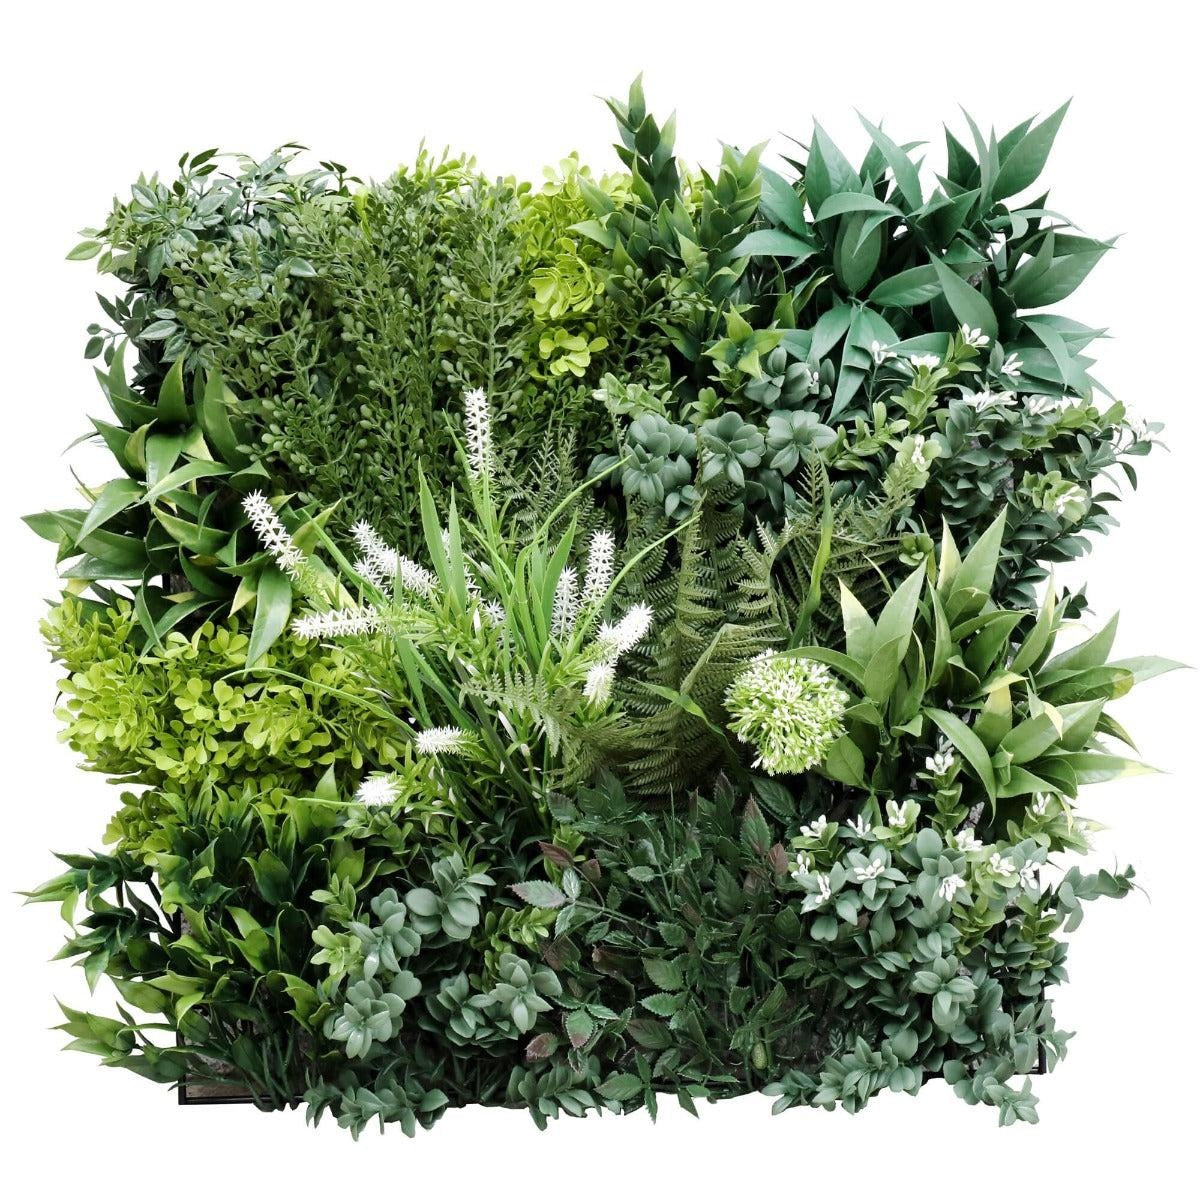 Flowering Bespoke Vertical Garden / Green Wall UV Resistant SAMPLE 45cm x 45cm Deals499